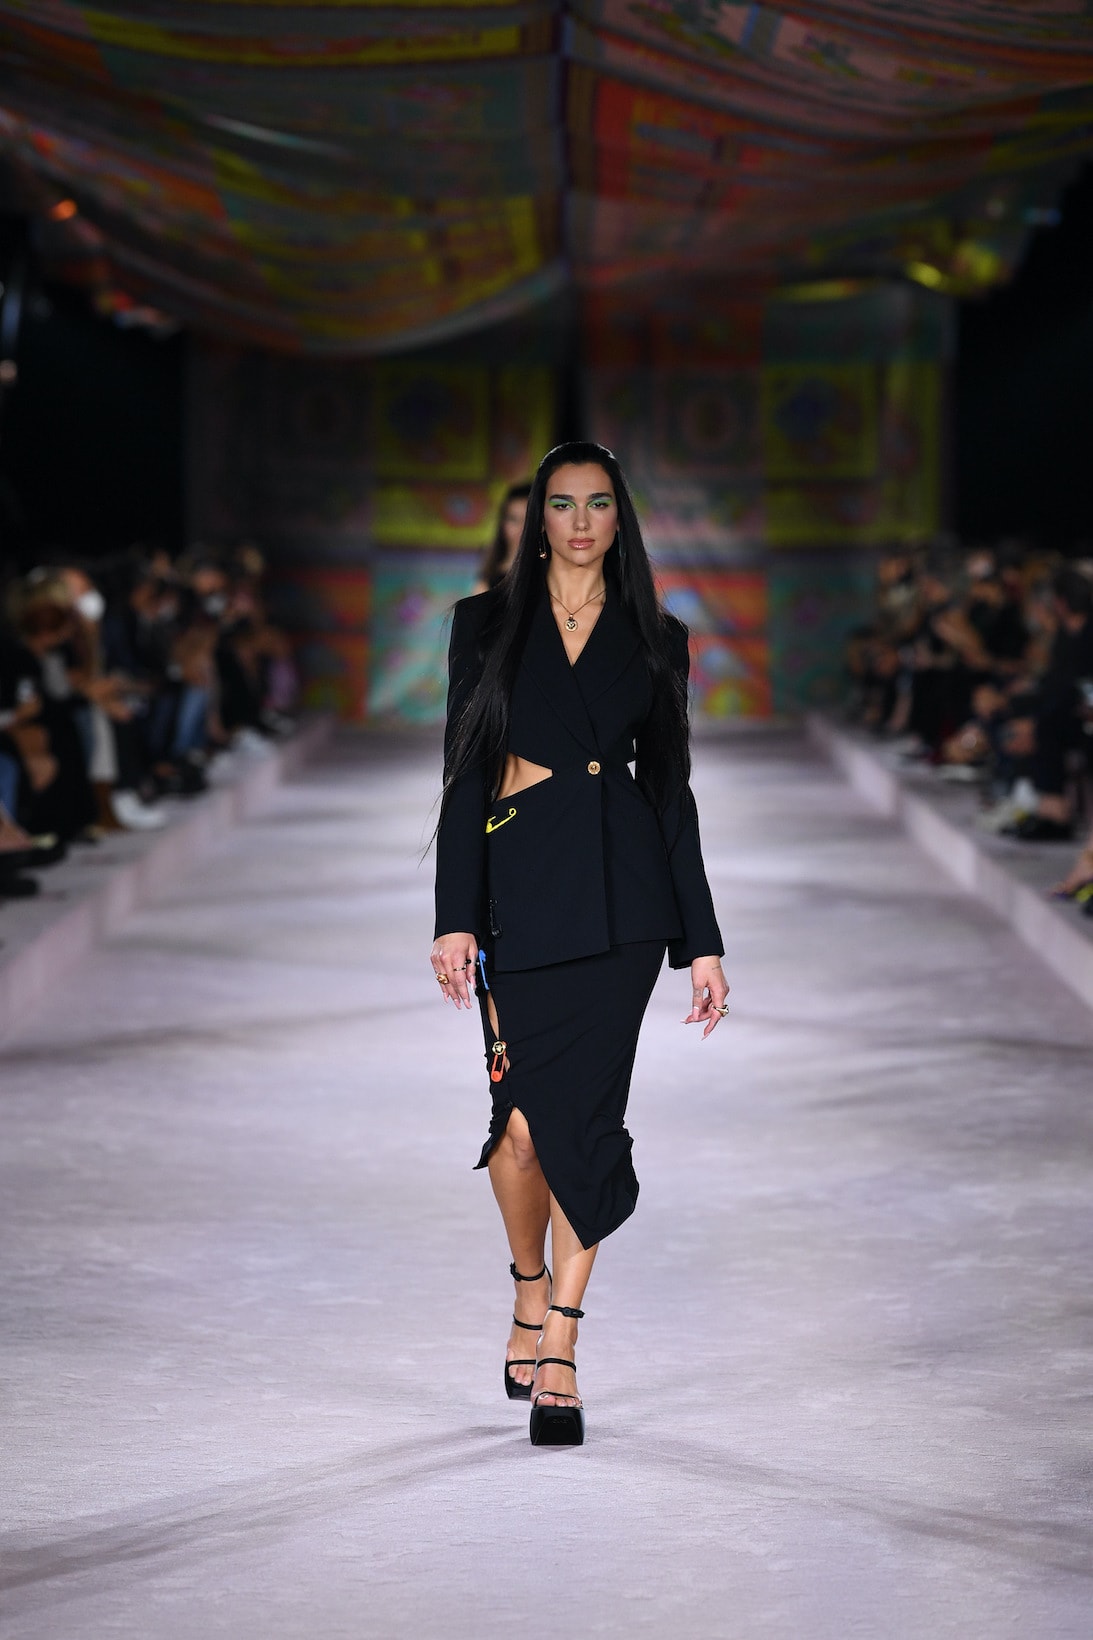 Versace and Fendi: Kim Jones and Donatella Versace swap places in